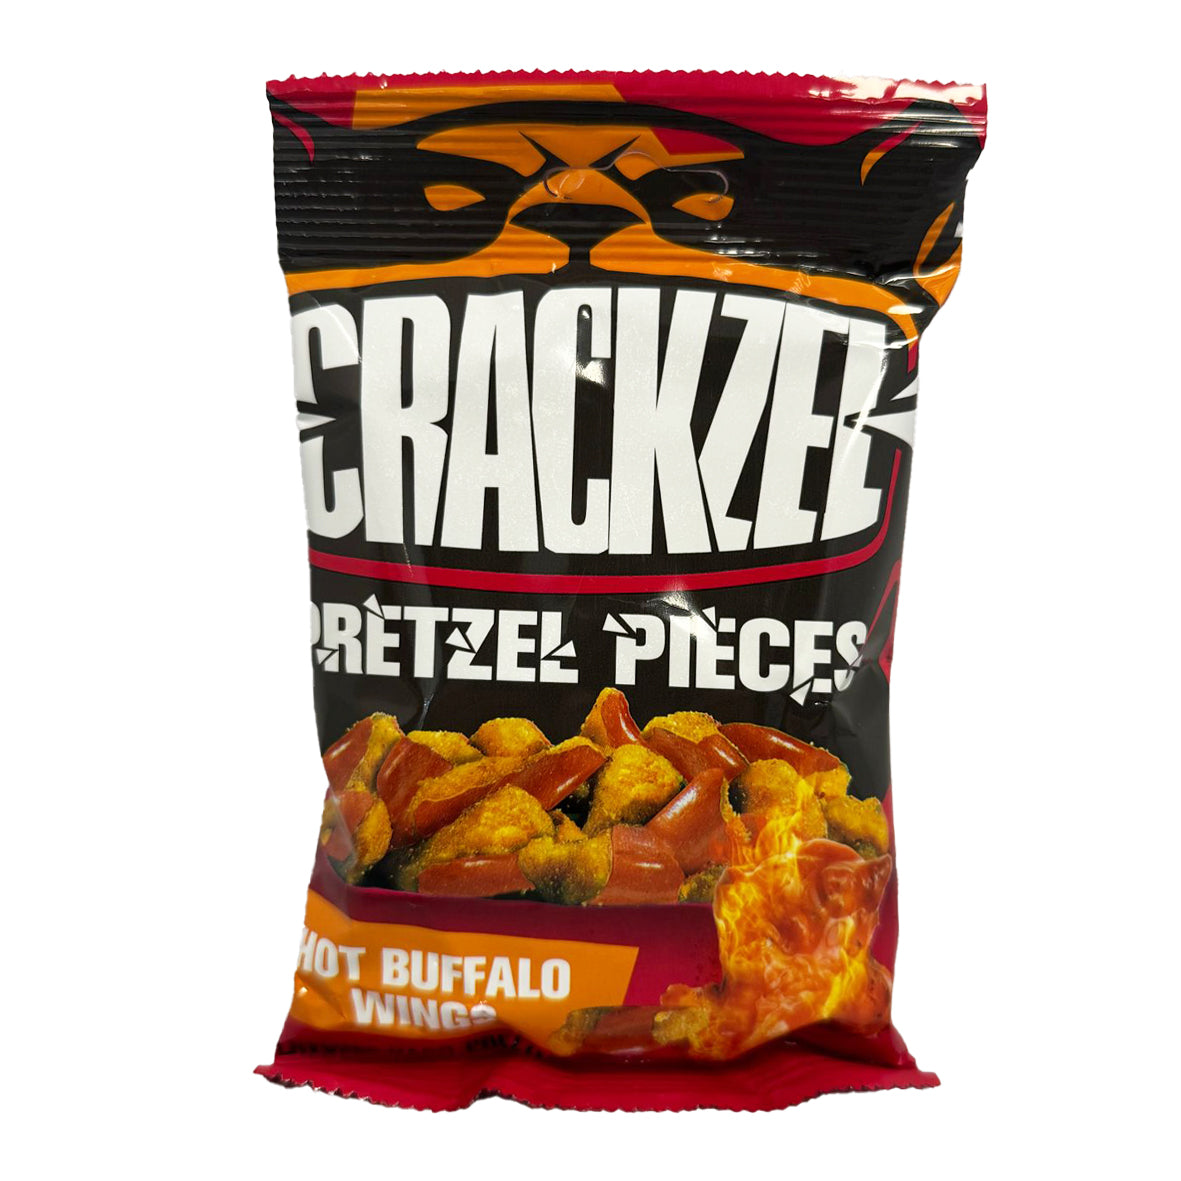 Crackzel Pretzel Pieces Hot Buffalo Wings